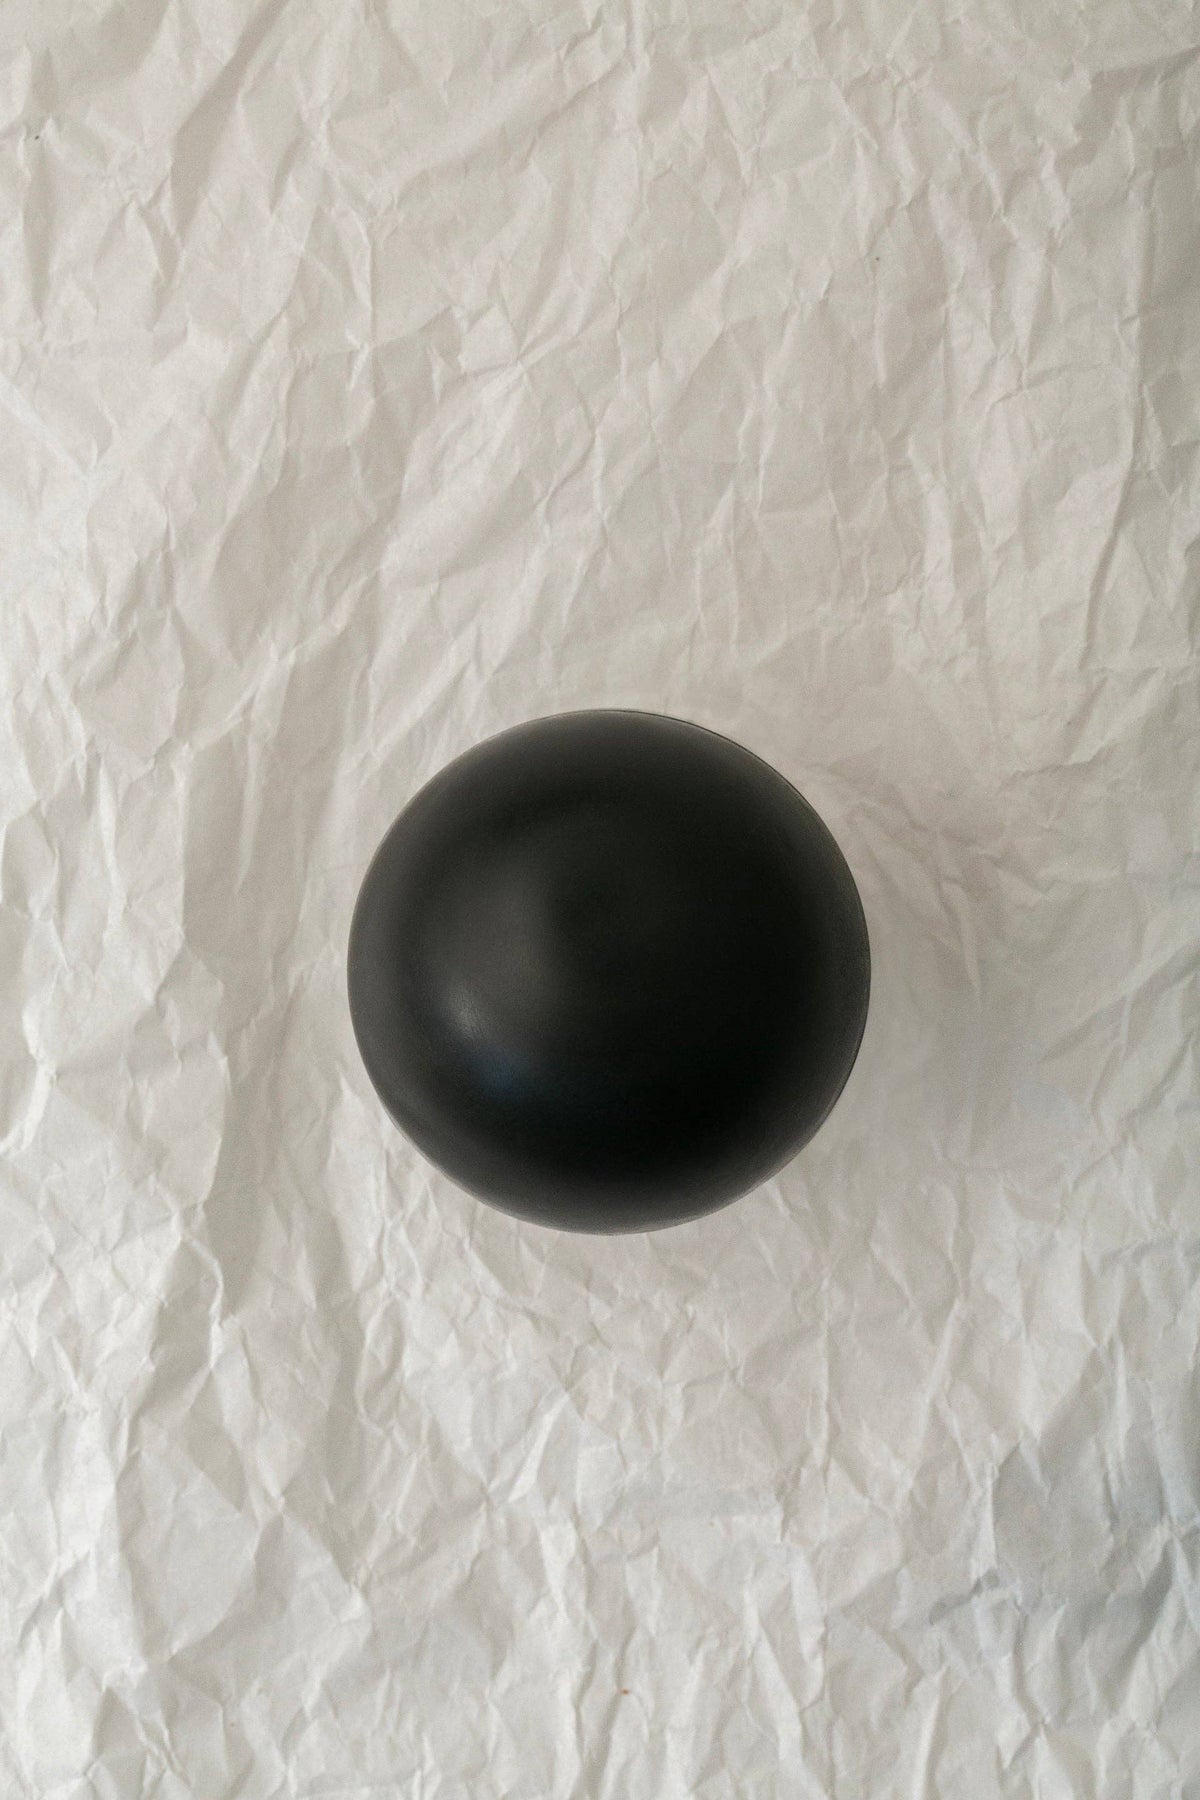 Gardeners Activated Charcoal Sphere Soap - Regenerative Tall: Gardeners Charcoal Tallow Sphere Soap - The Unoriginal Bathroom Co.